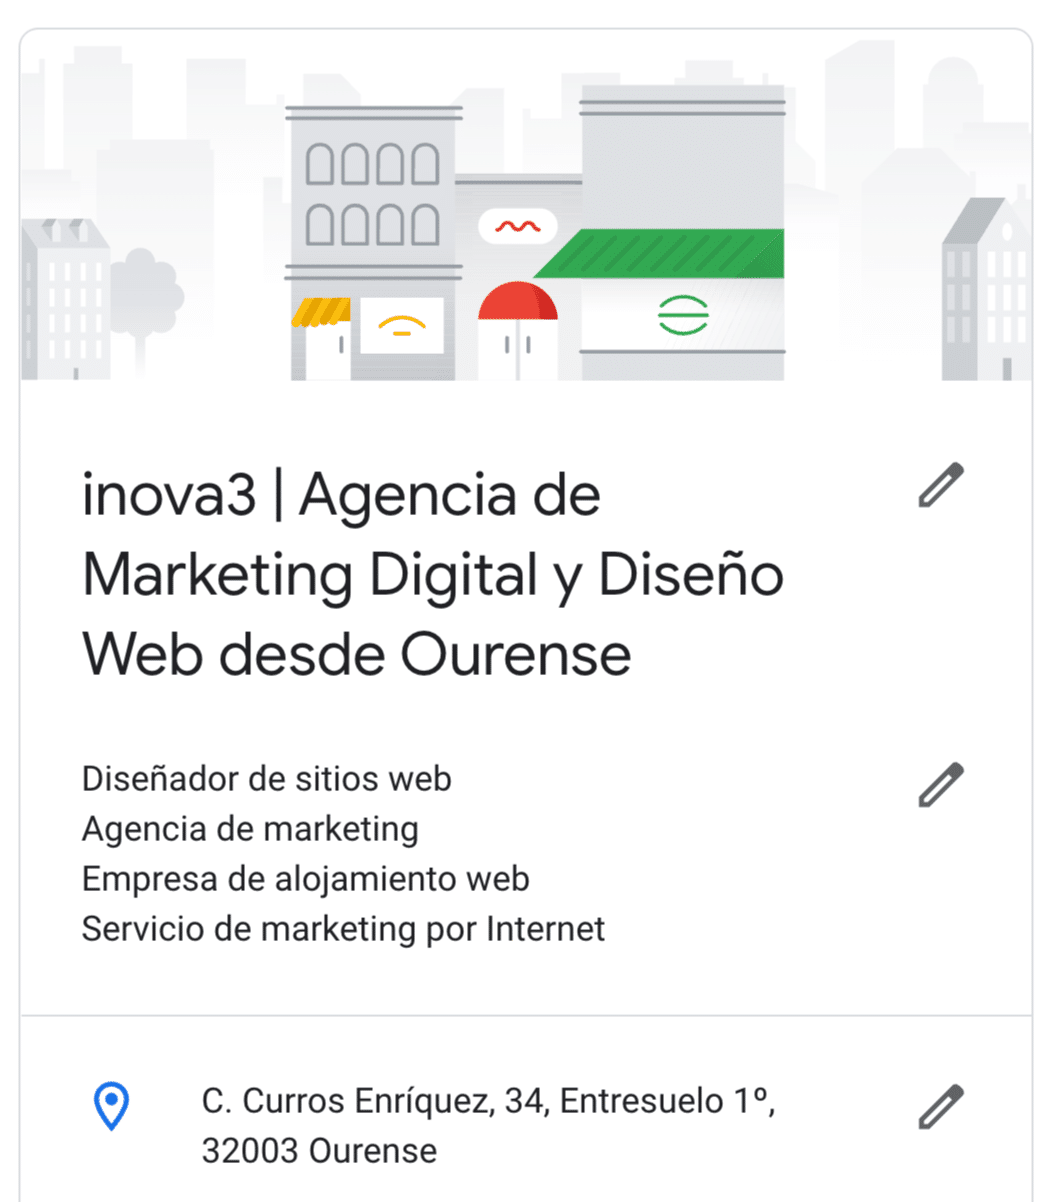 Cómo rellenar título y categoría en Google My Business 2022 - inova3 - Marketing digital desde ourense